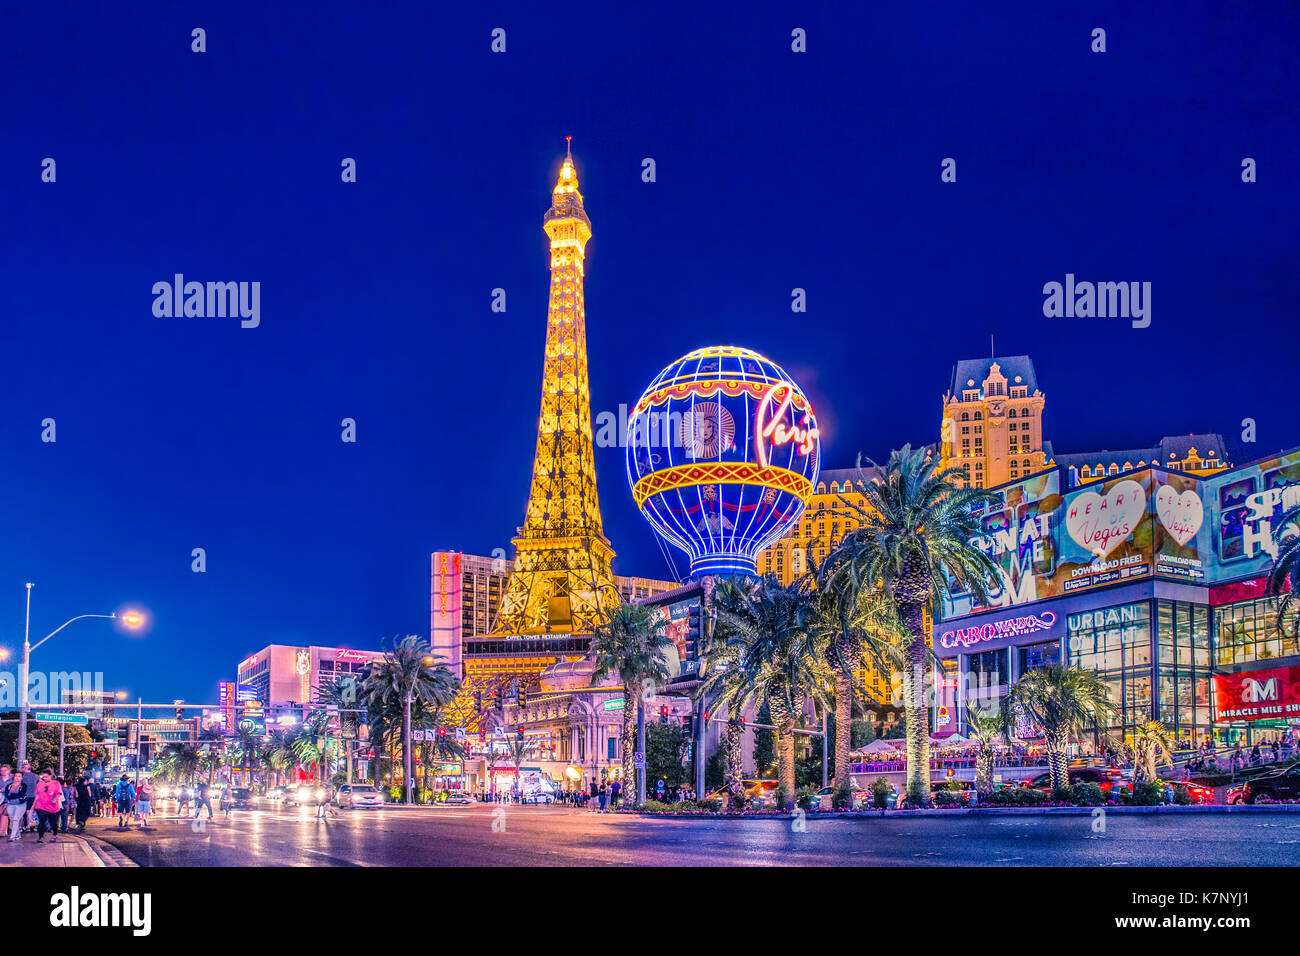 LAS VEGAS, NEVADA - MAY 17, 2017: Beautiful night view of Las Vegas with Paris Resort Casino and hotels in view. Stock Photo